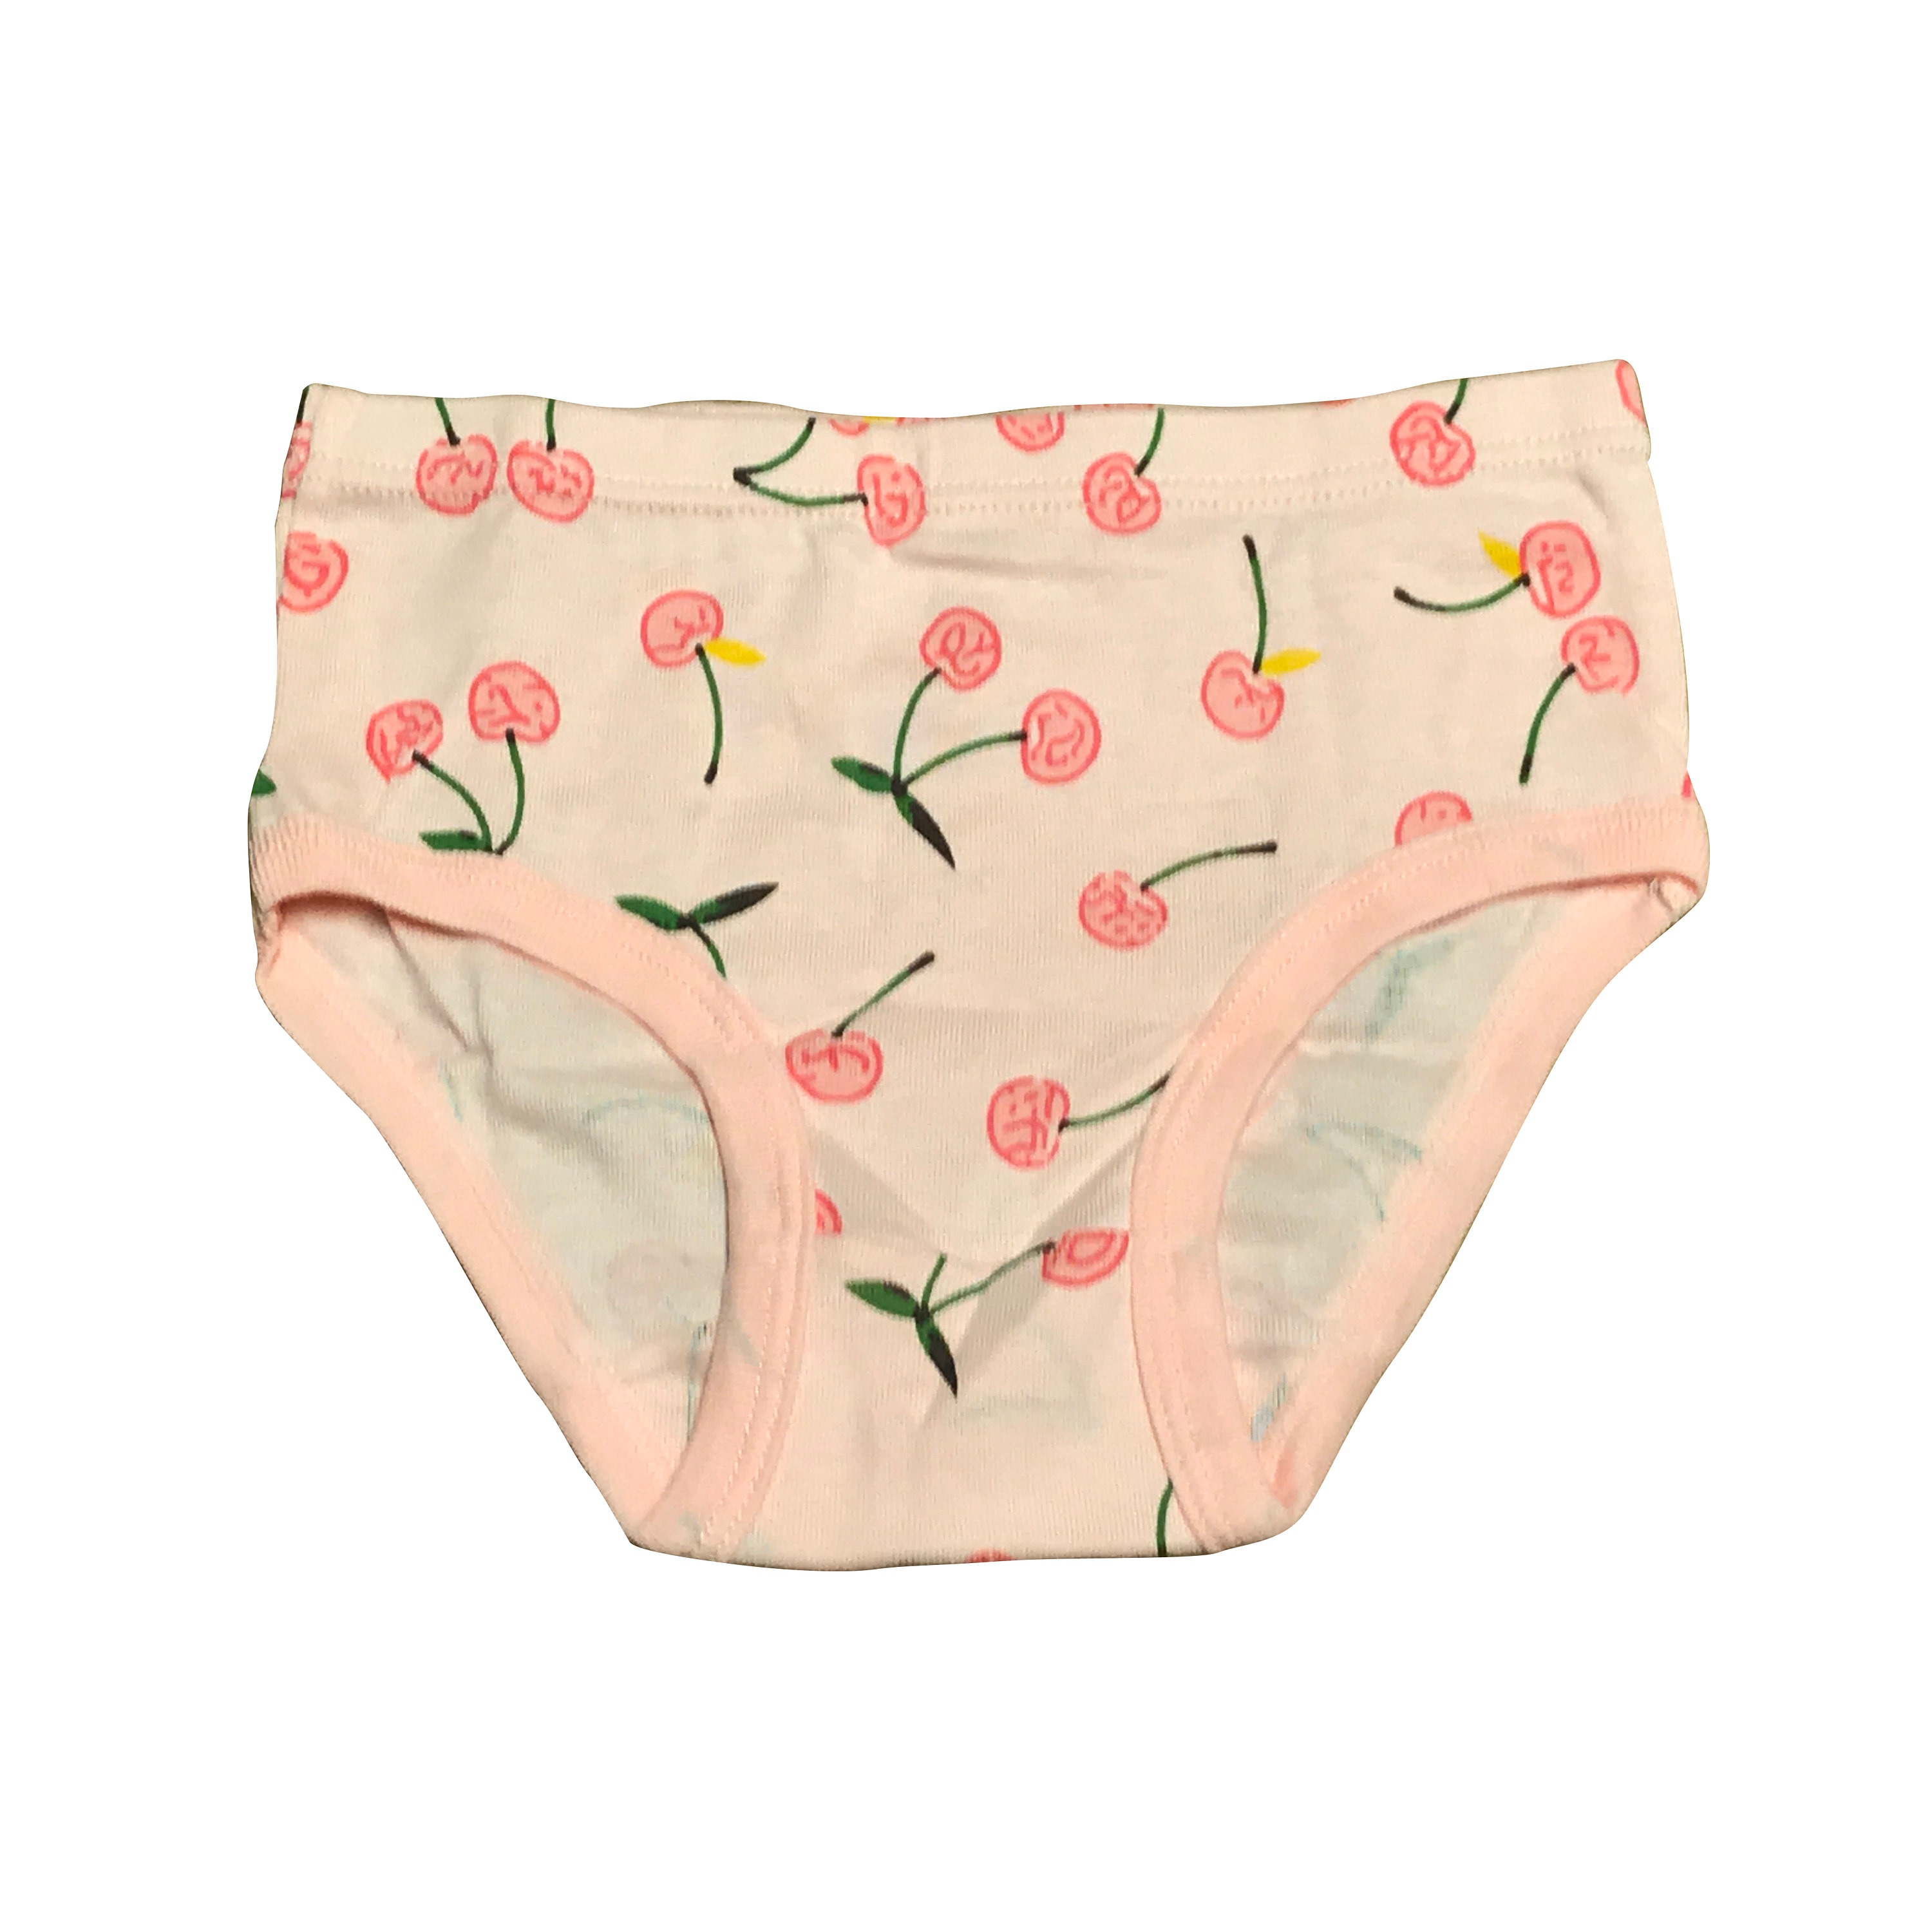 6 Pack Toddler Little Girls Cotton Underwear Briefs Kids Panties Underpants 2T  3T 4T 5T 6T 7T -  Denmark